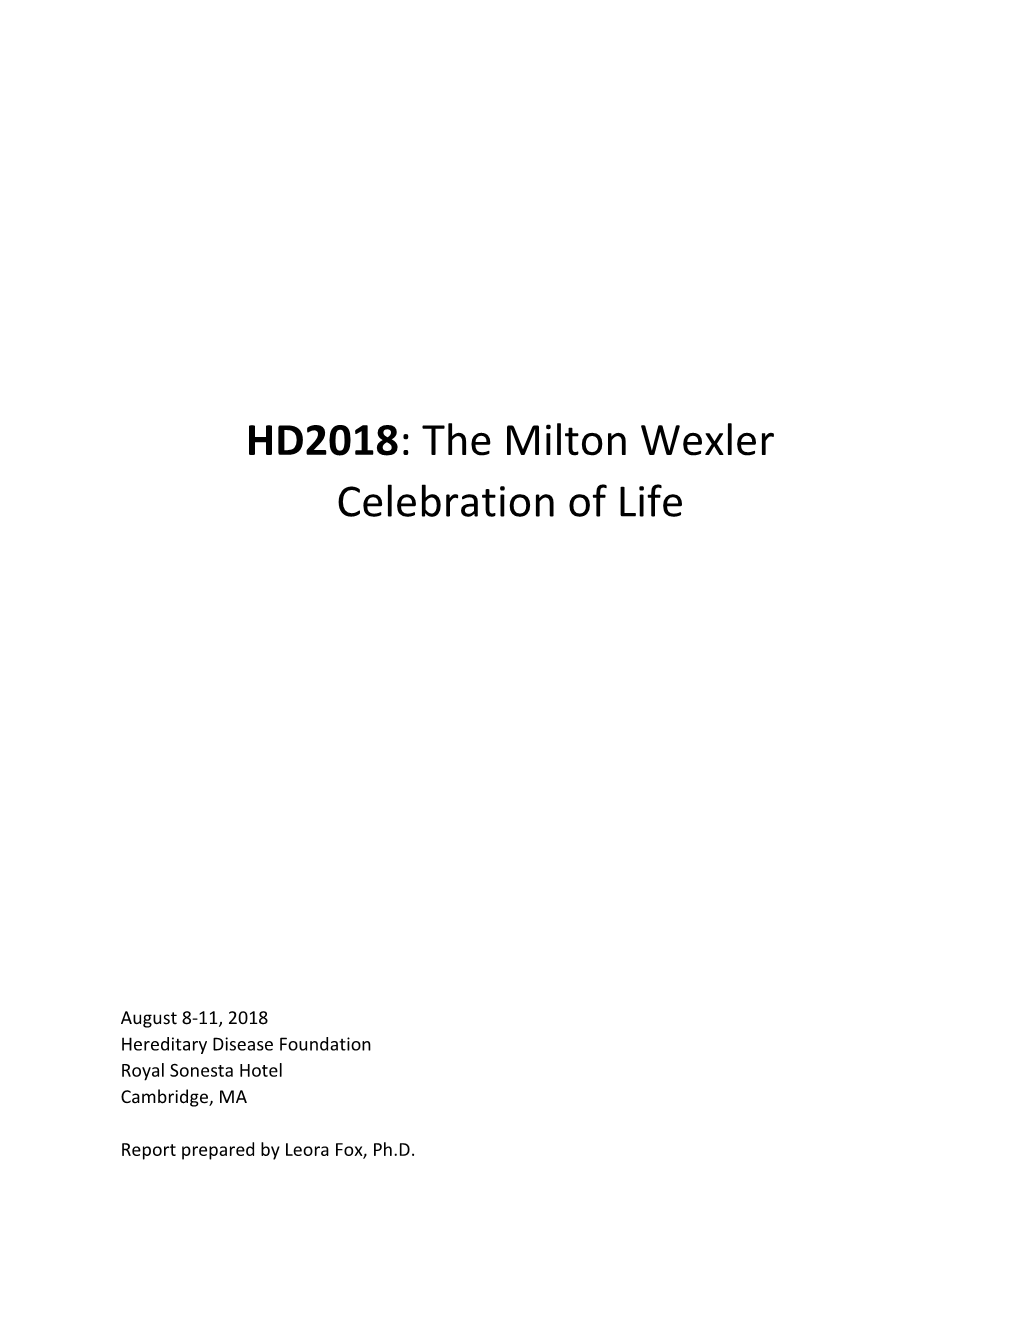 HD2018: the Milton Wexler Celebration of Life